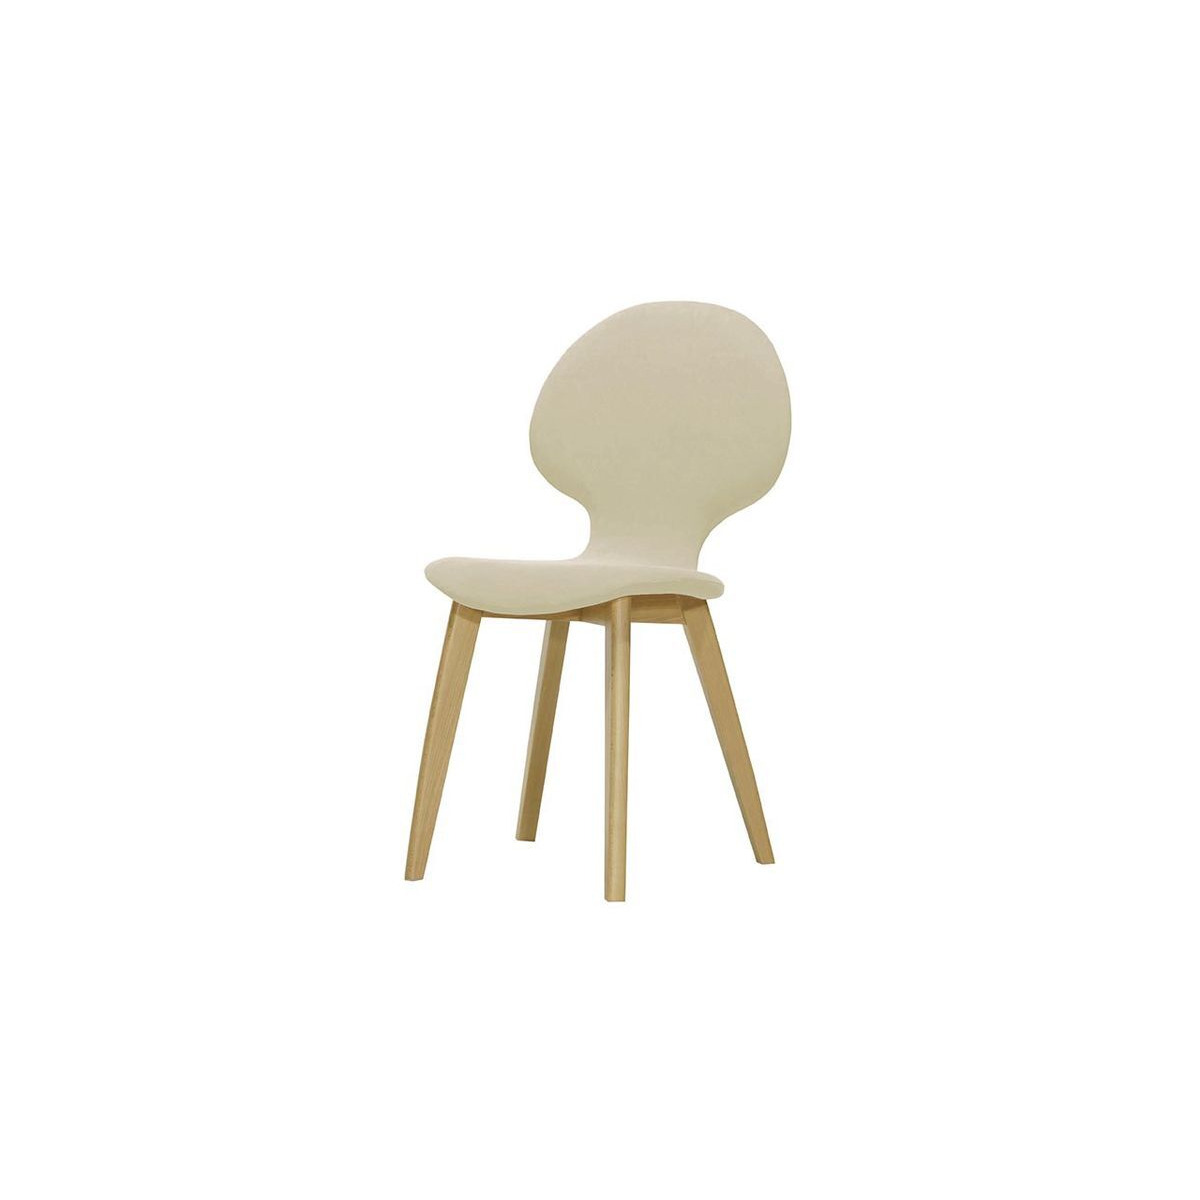 Mya Dining Chair, cream, Leg colour: like oak - image 1